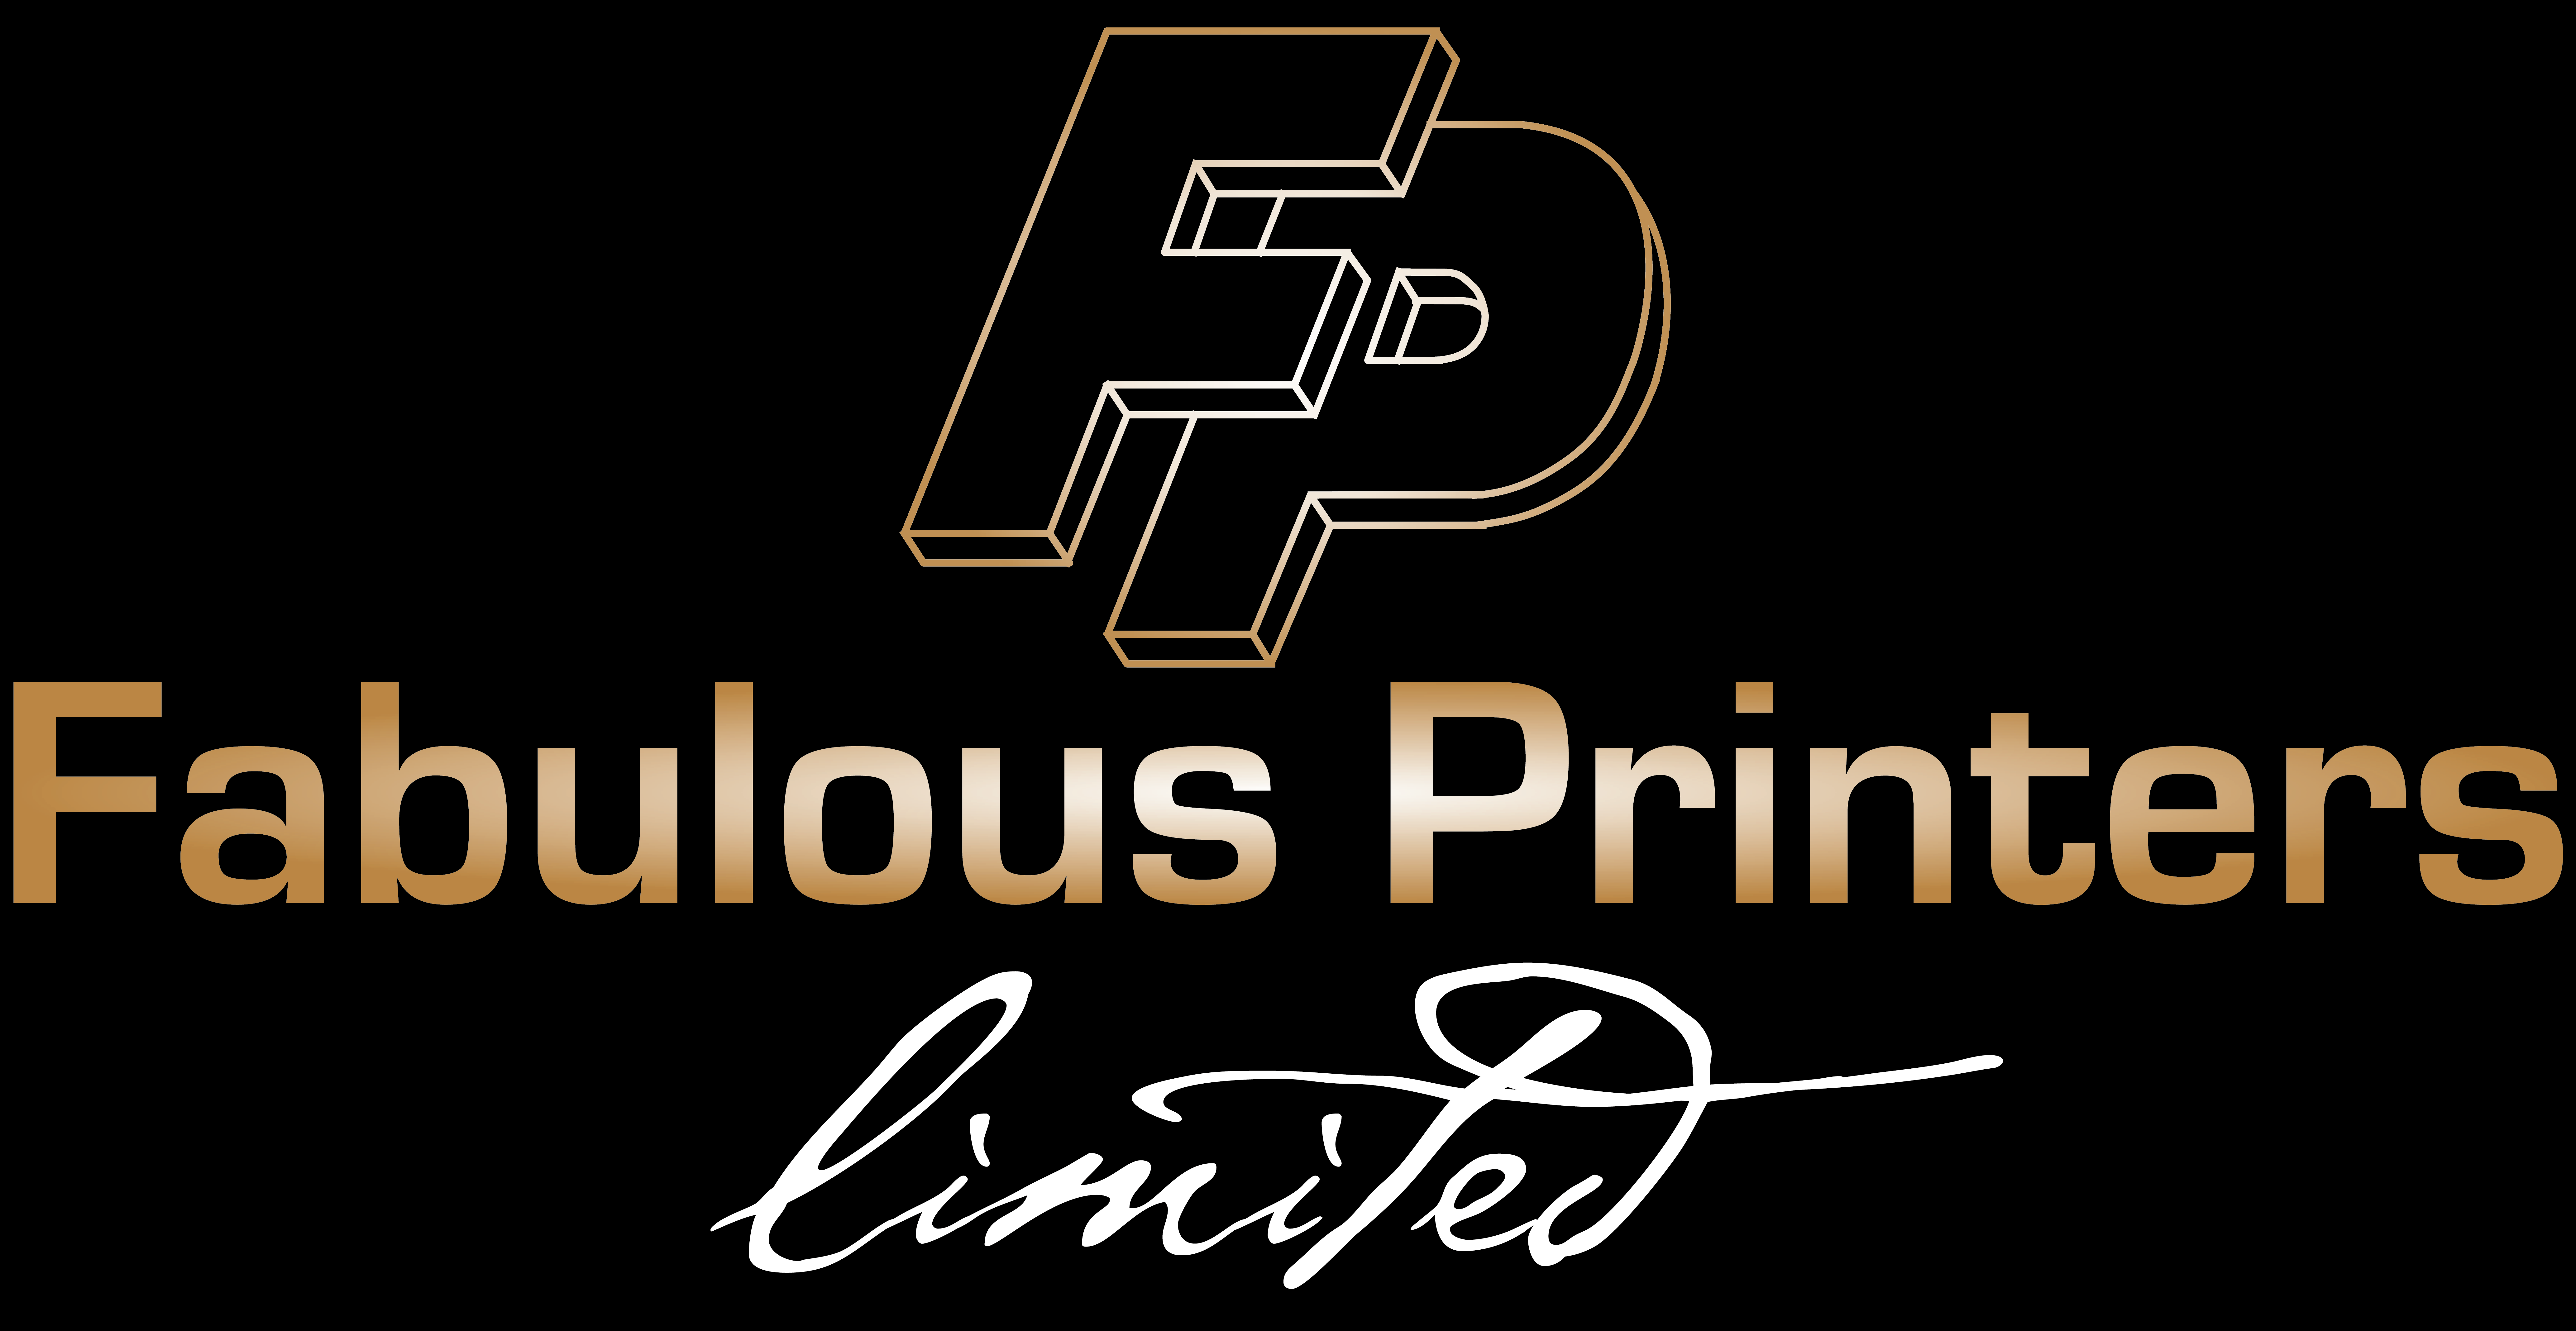 Fabulous Printers Ltd